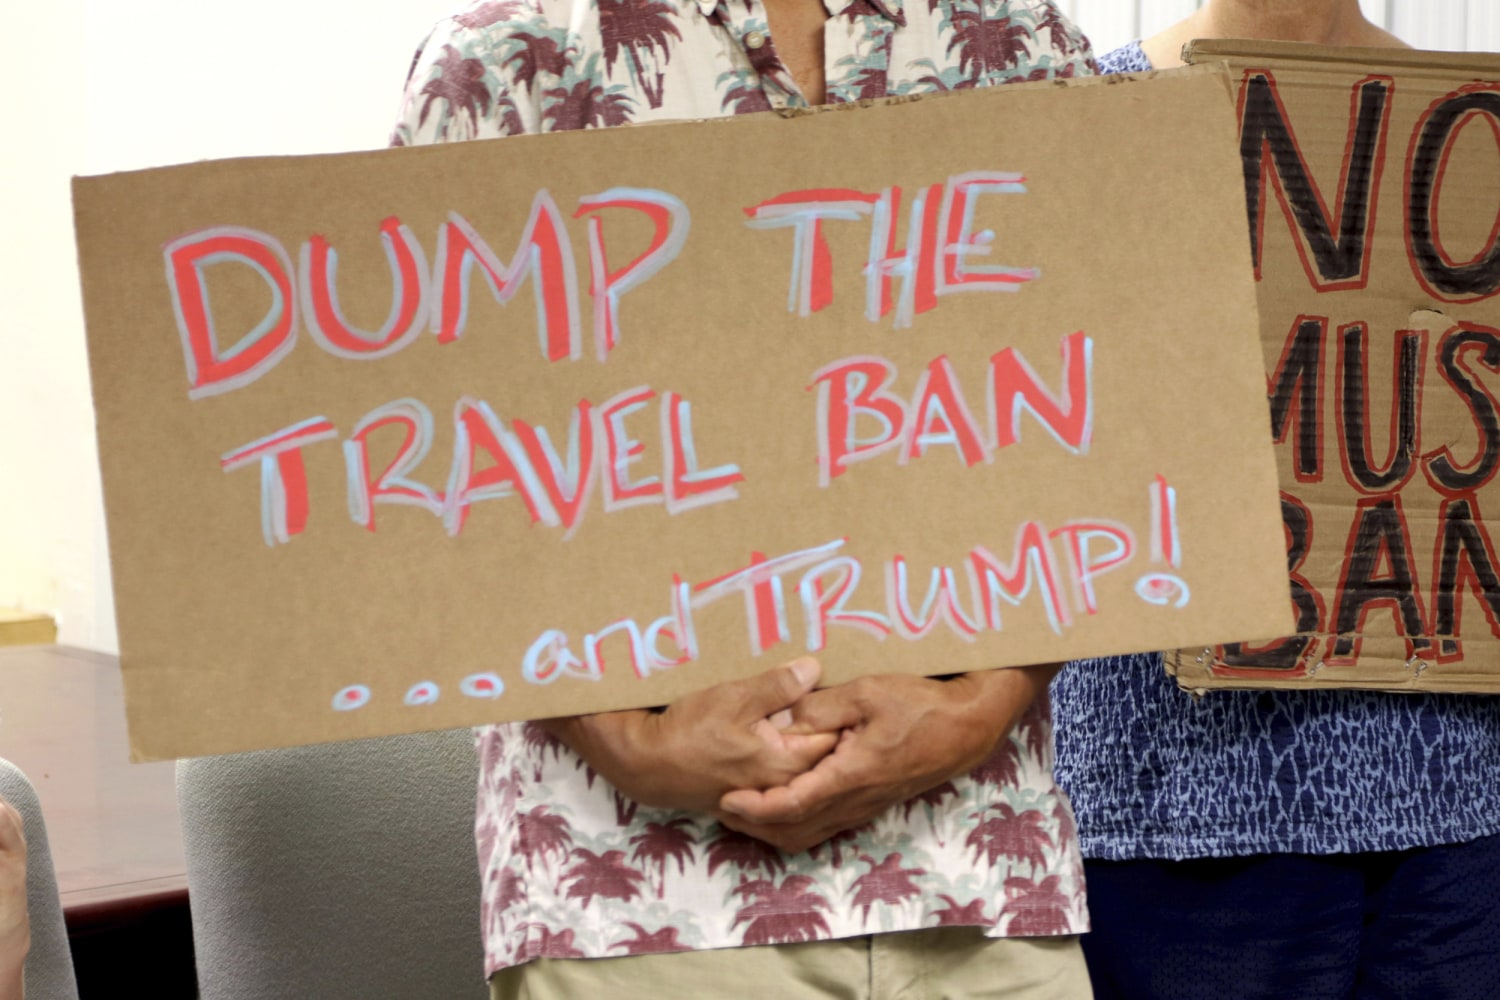 travel ban news 4